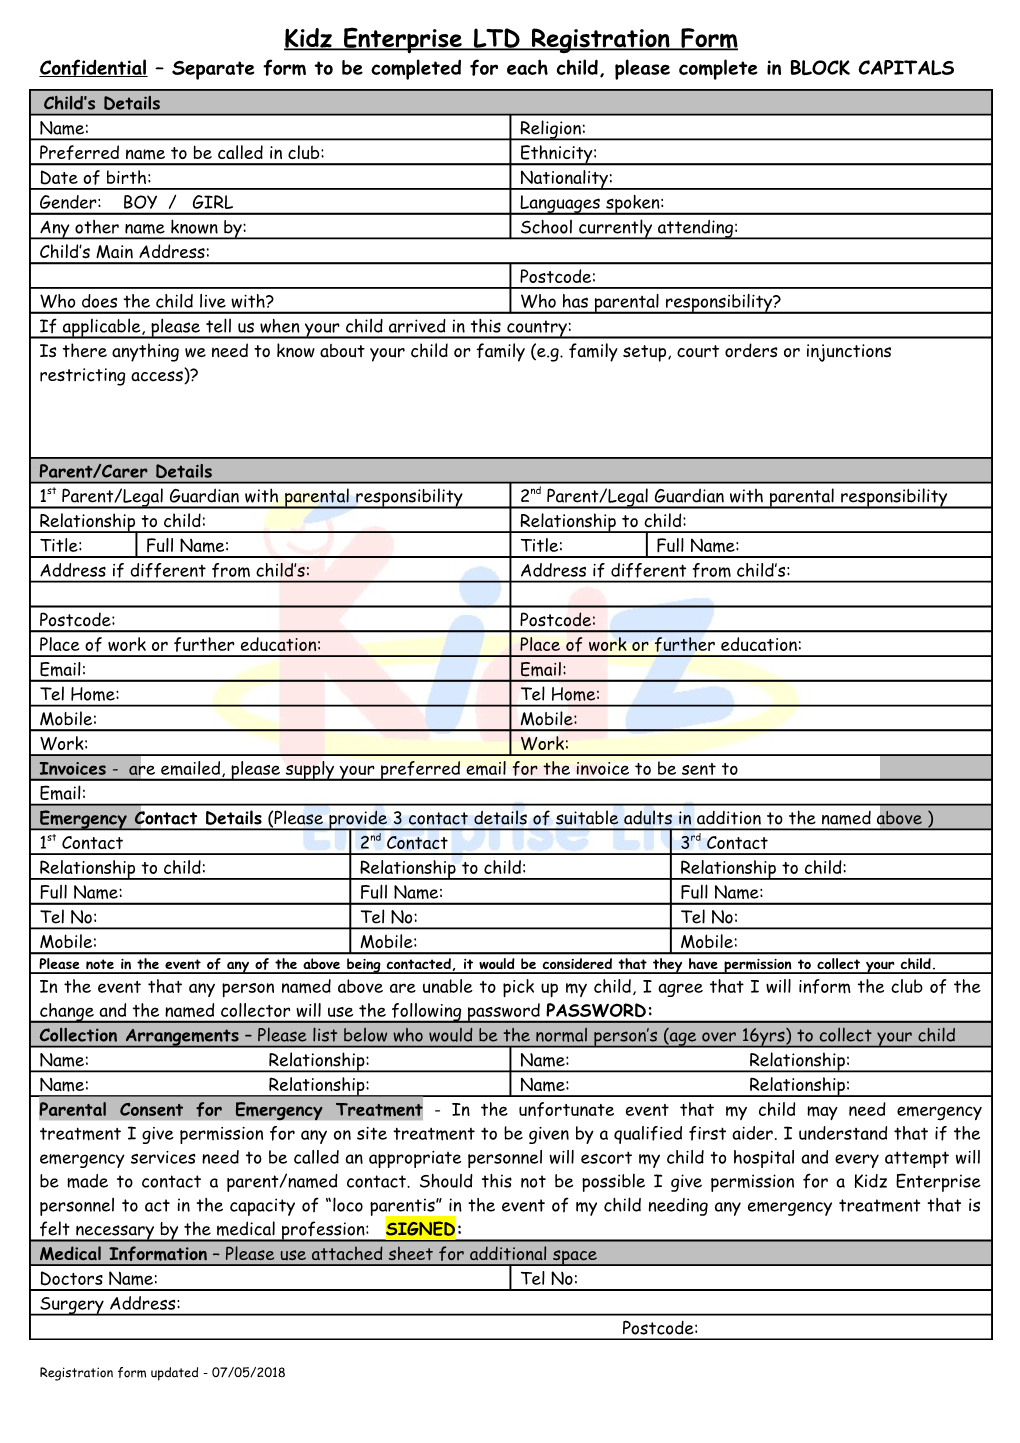 Kidz Enterprise LTD Registration Form